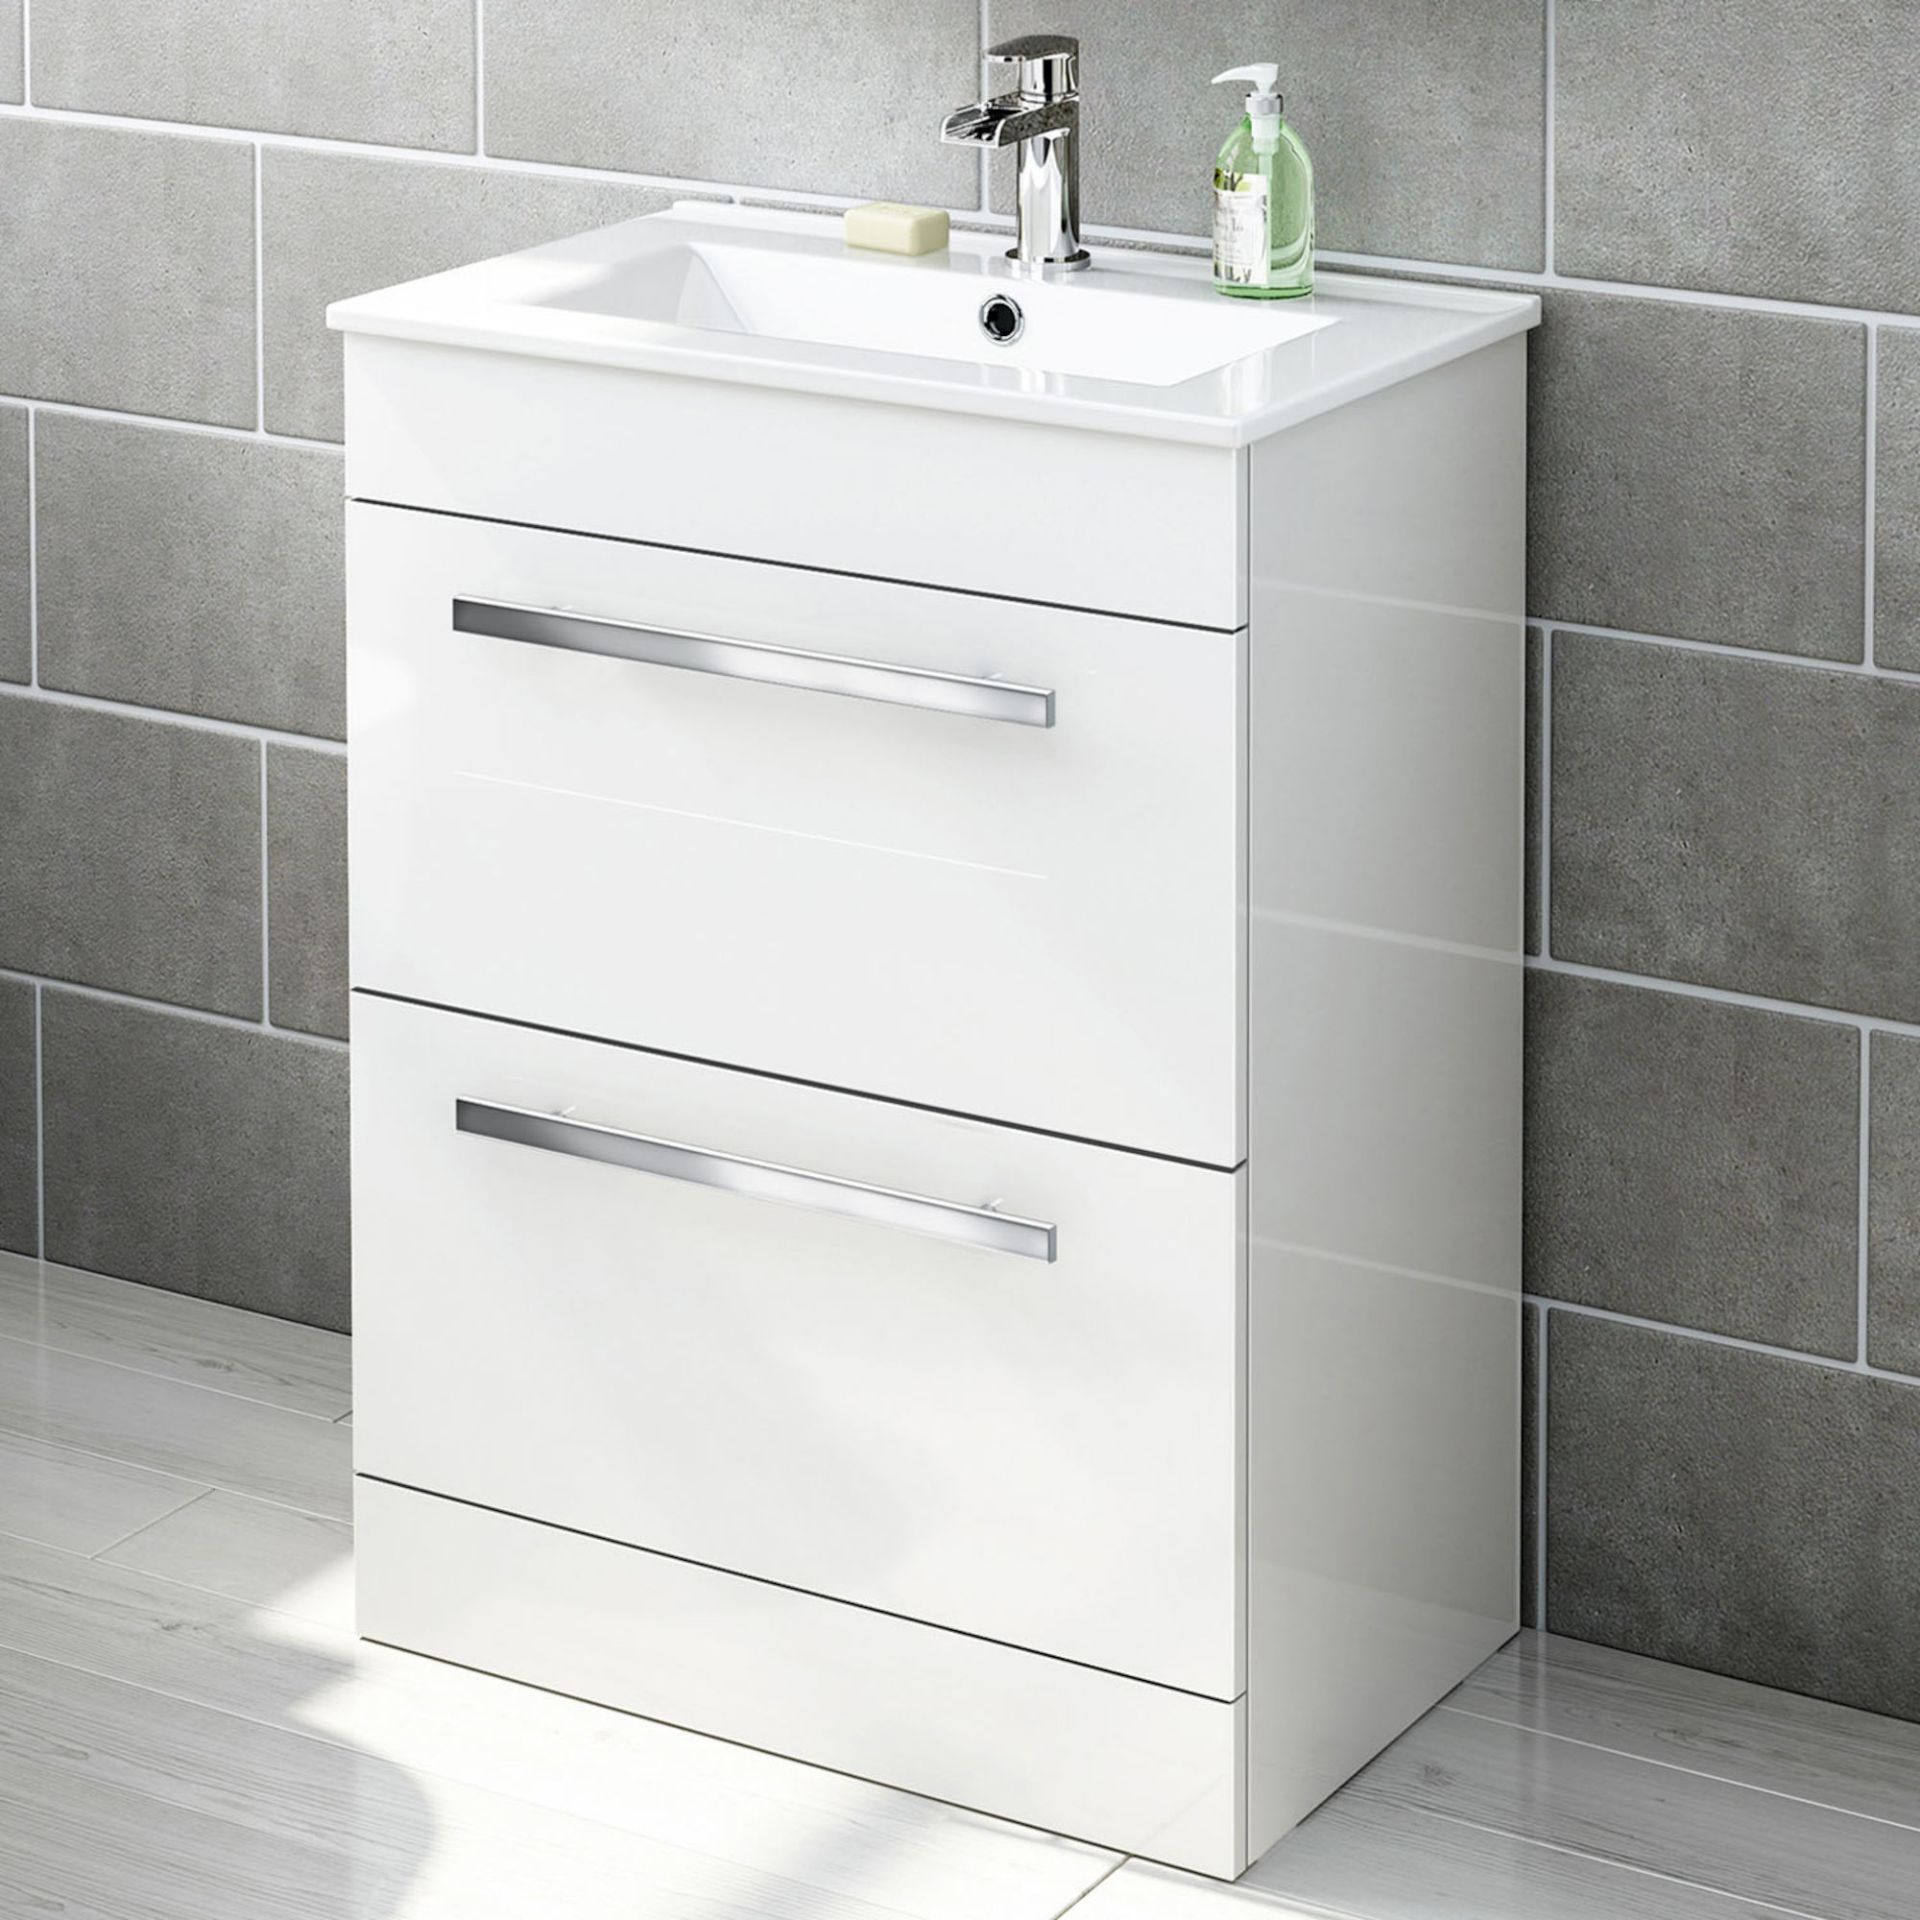 (DK305) 600mm Avon High Gloss White Double Drawer Basin Cabinet - Floor Standing. RRP £499.99. Comes